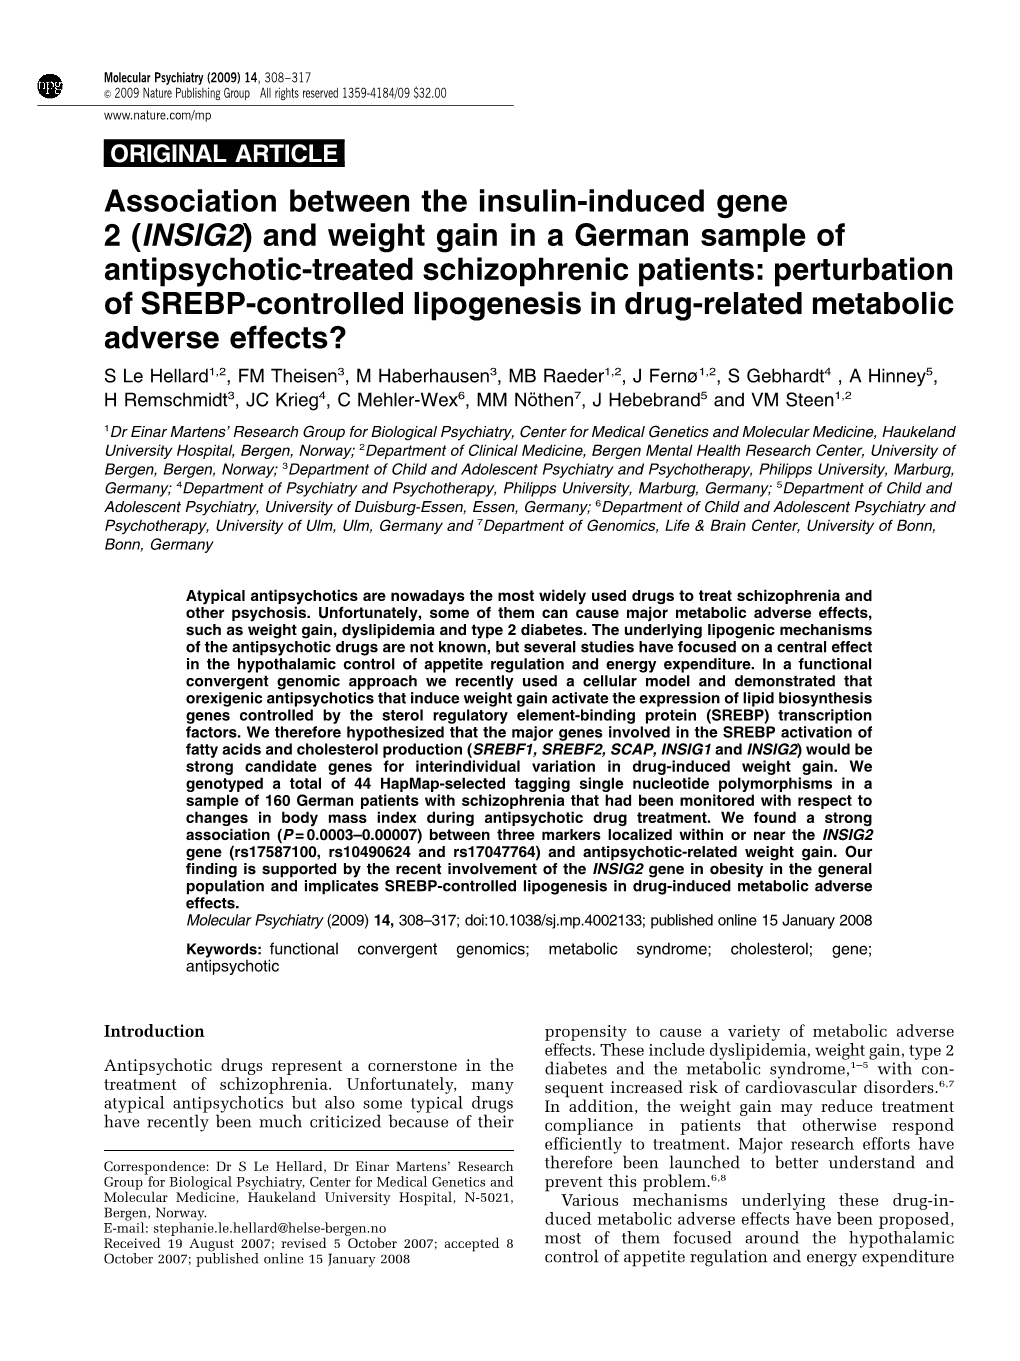 Association Between the Insulin-Induced Gene 2 (INSIG2